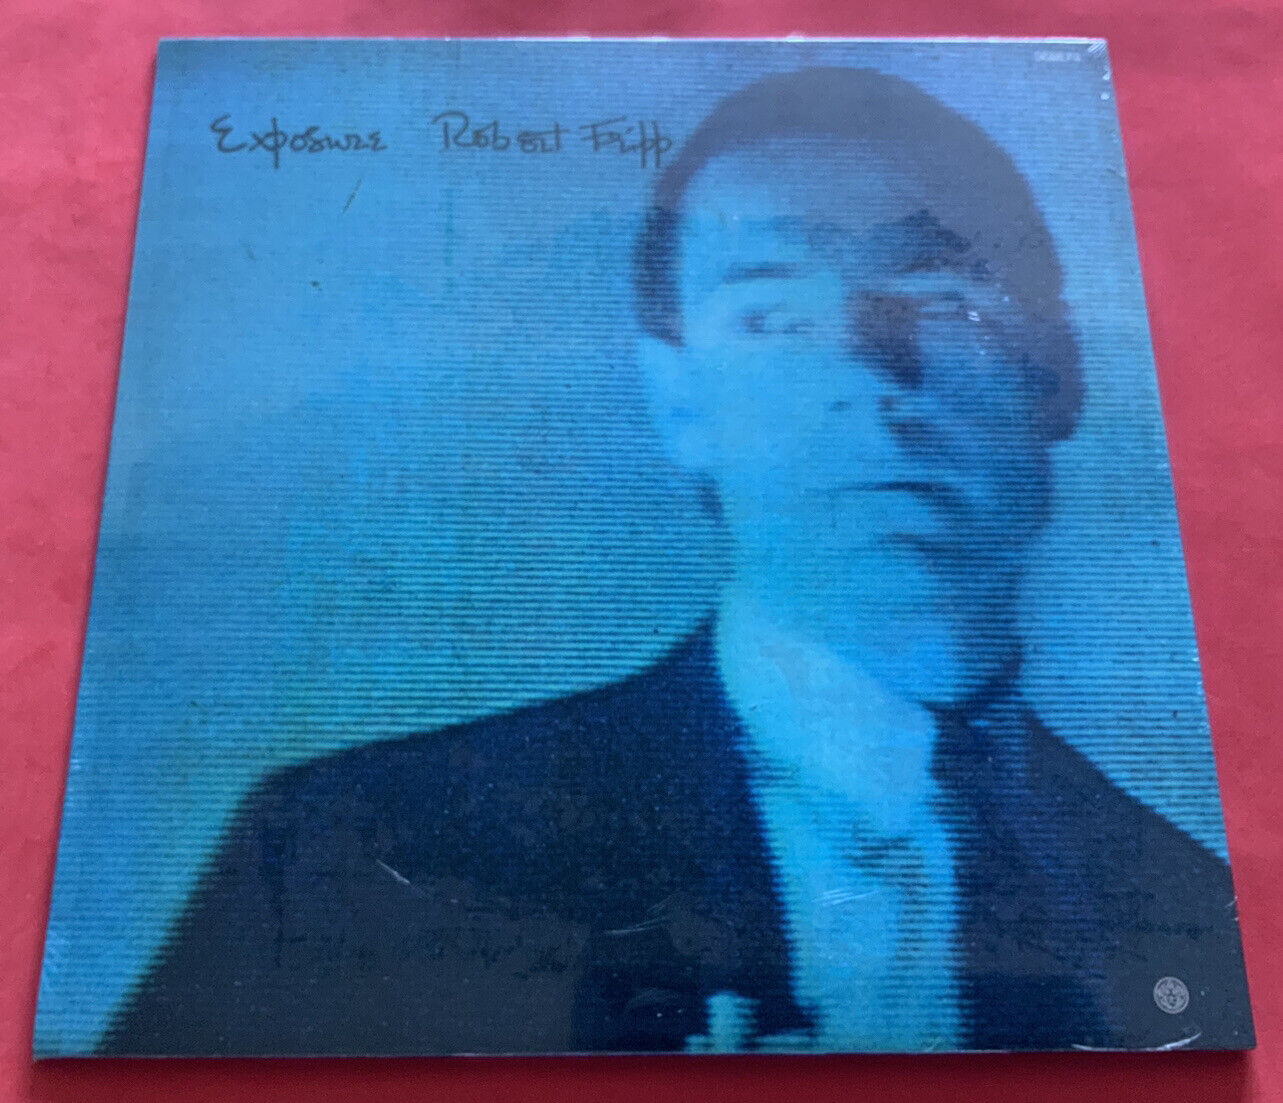 Robert Fripp: Exposure (Steven Wilson mix) ~200gm Vinyl New/Mint/Sealed.